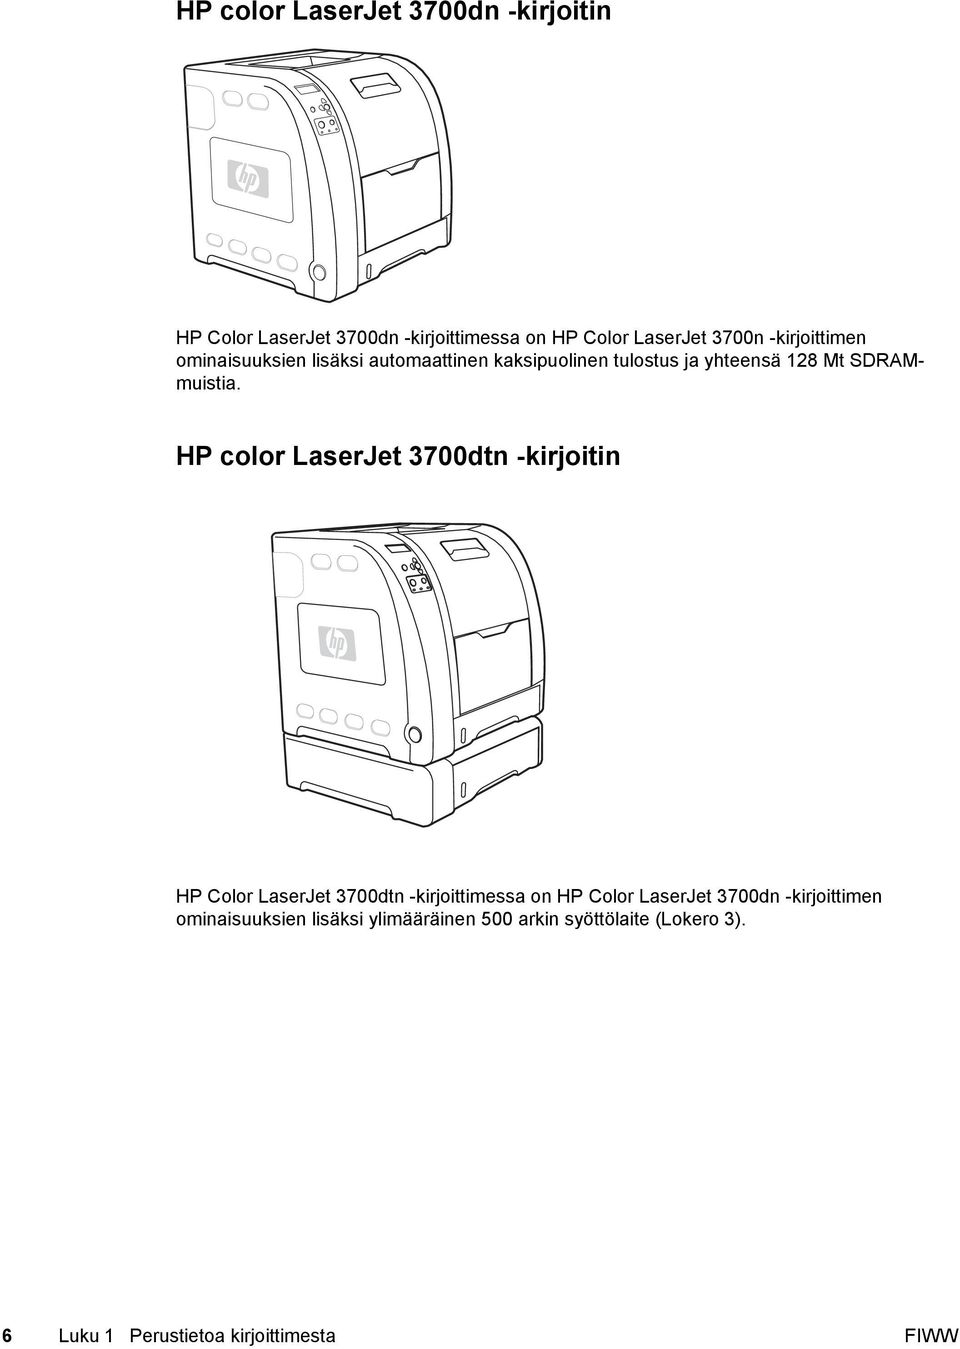 HP color LaserJet 3700dtn -kirjoitin HP Color LaserJet 3700dtn -kirjoittimessa on HP Color LaserJet 3700dn